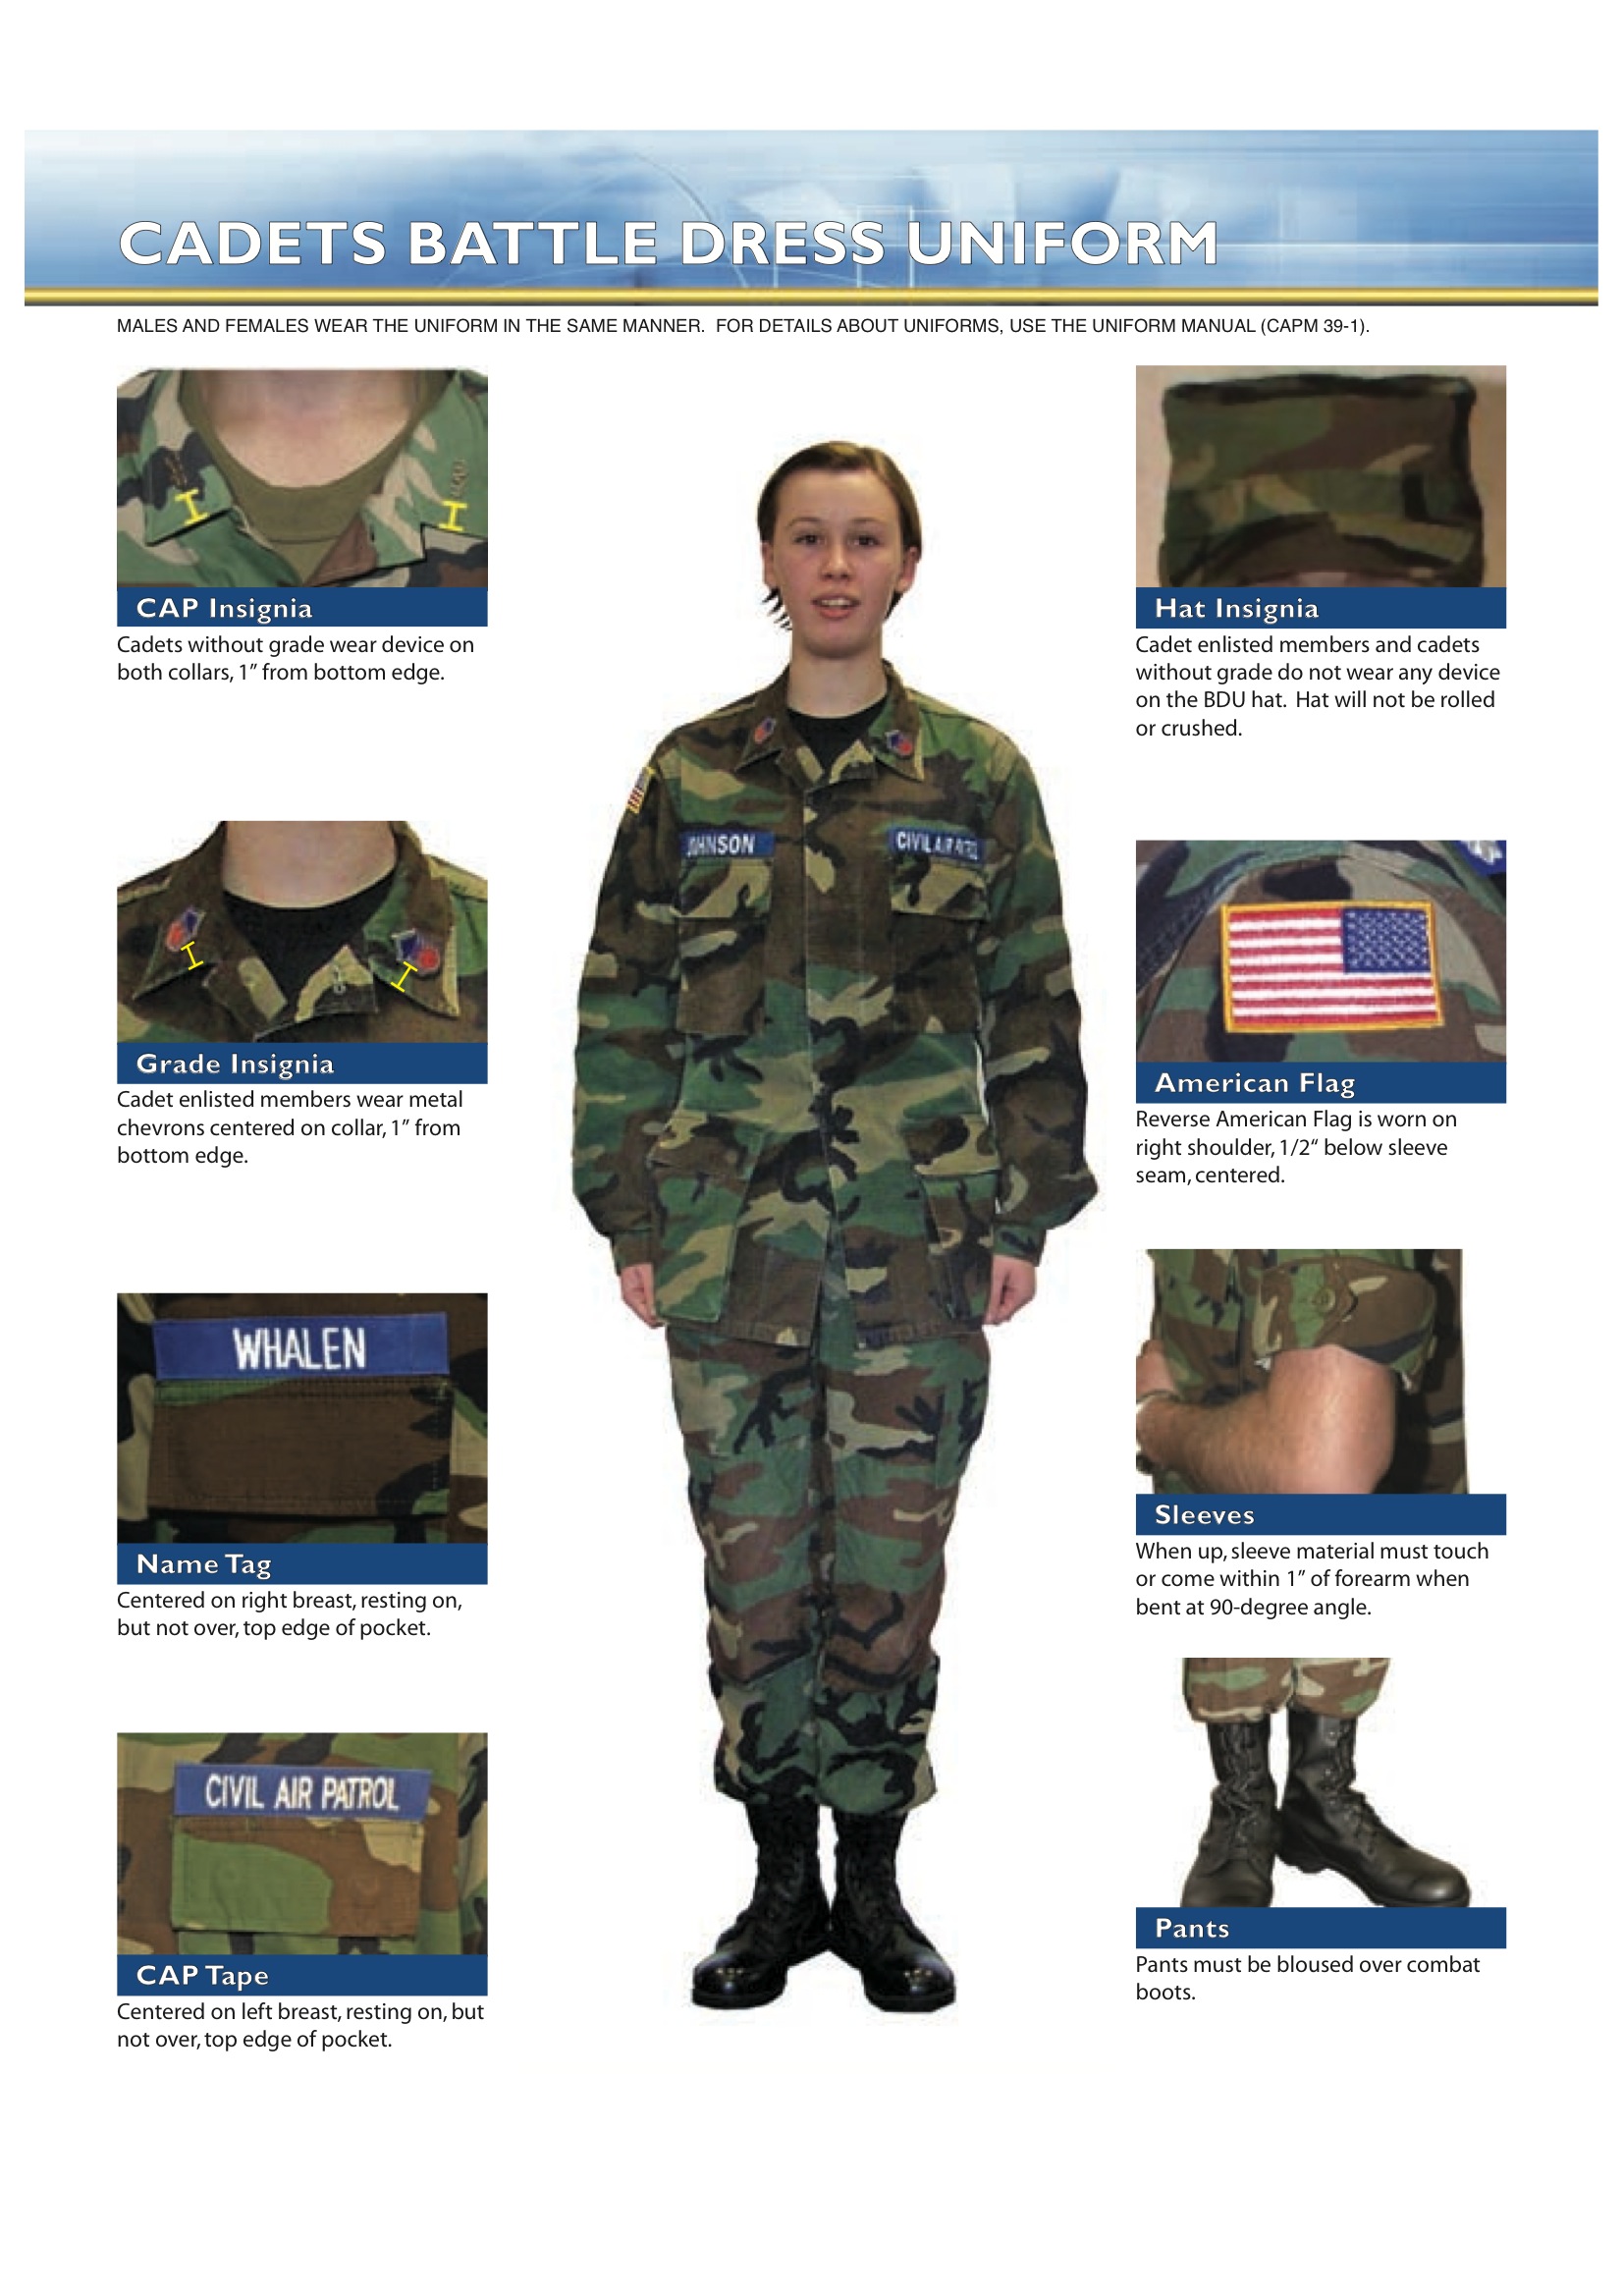 Army Bdu Uniform Patch Placement - peoplekawevq